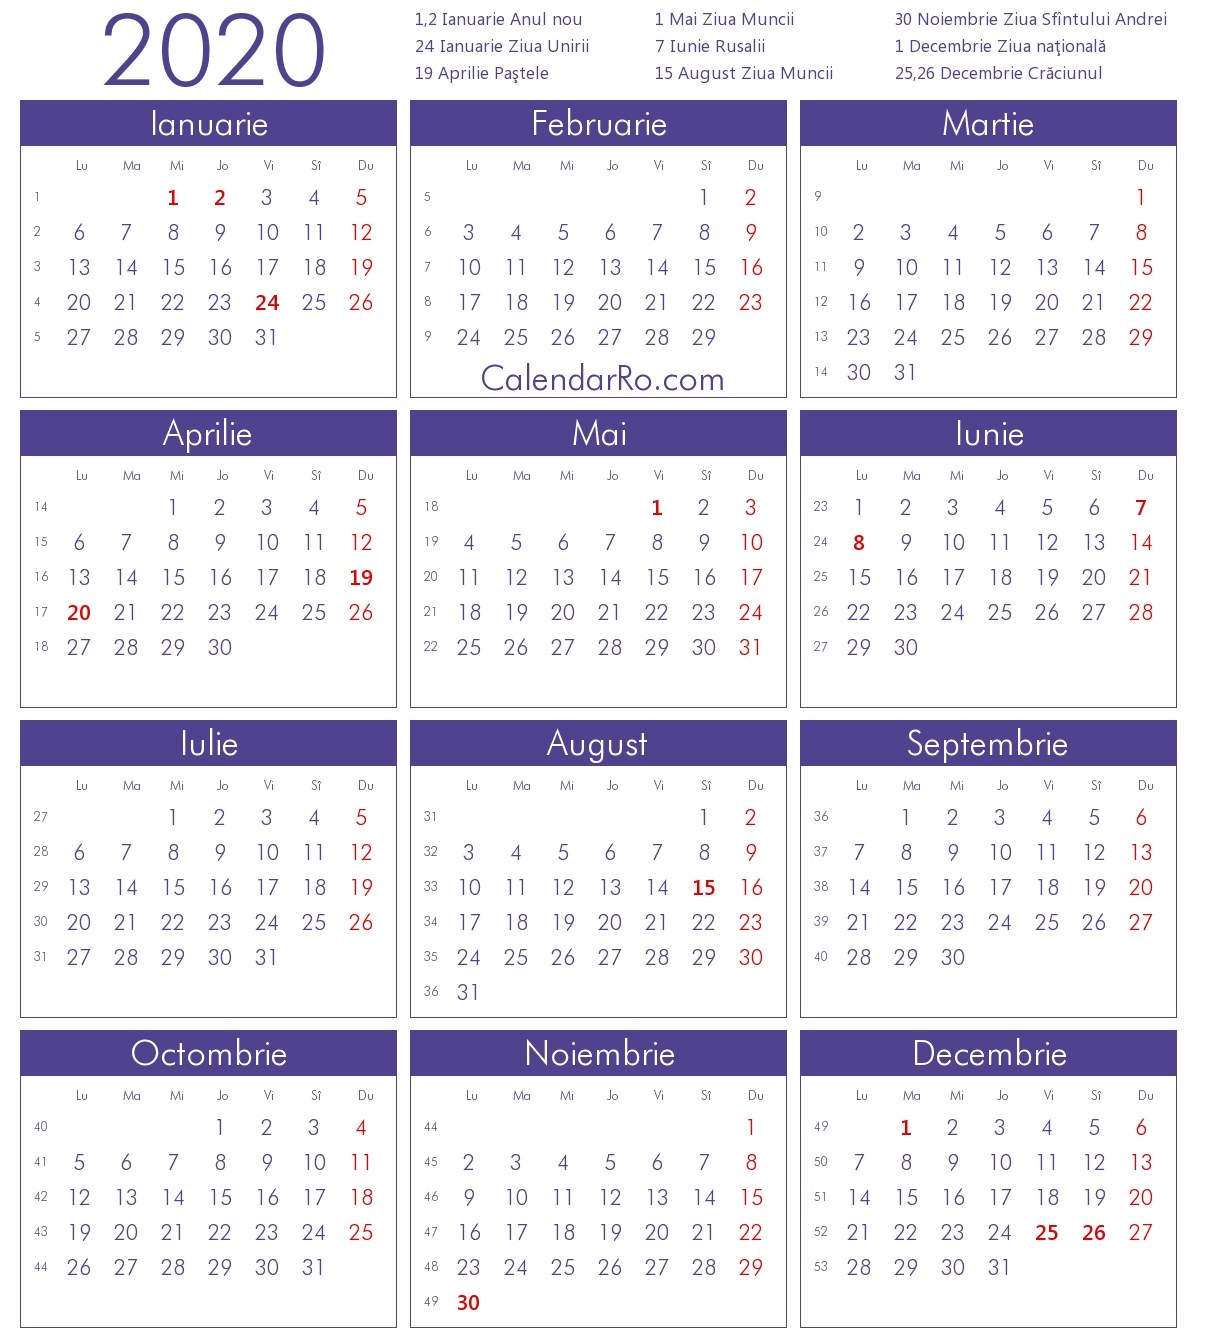 Calendar 2020 Remarkable Calendar 2020 In Limba Romana